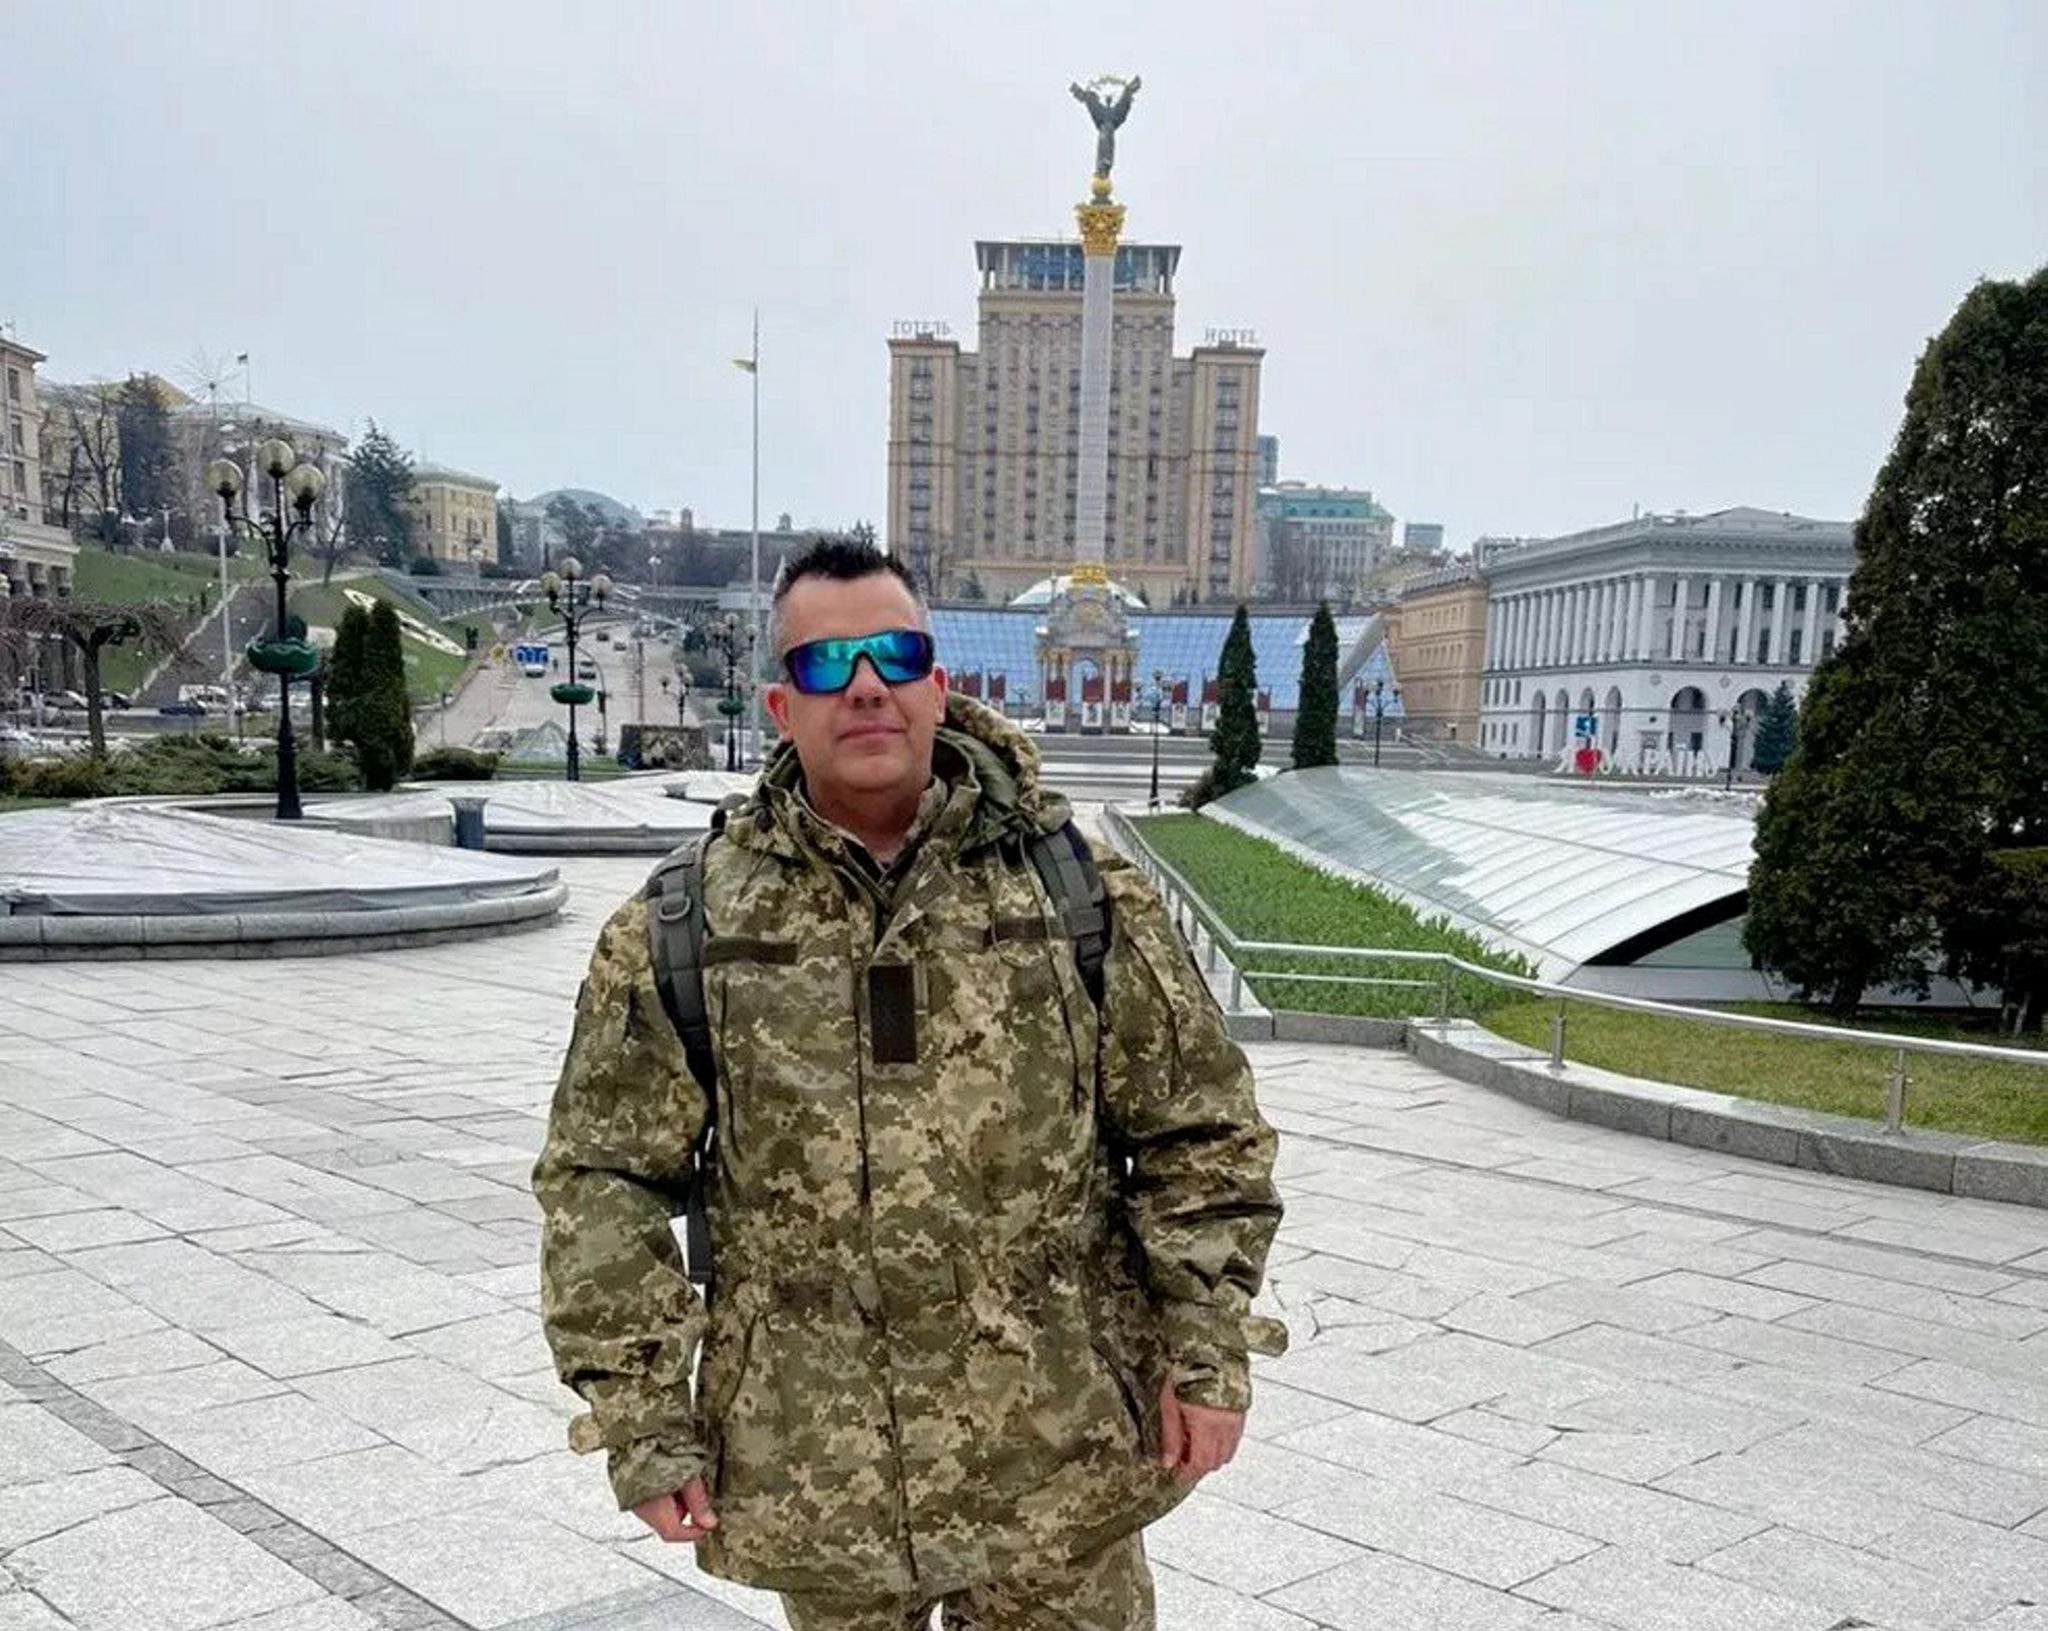 André Bahi integrava a Legião Internacional de Defesa Territorial da Ucrânia